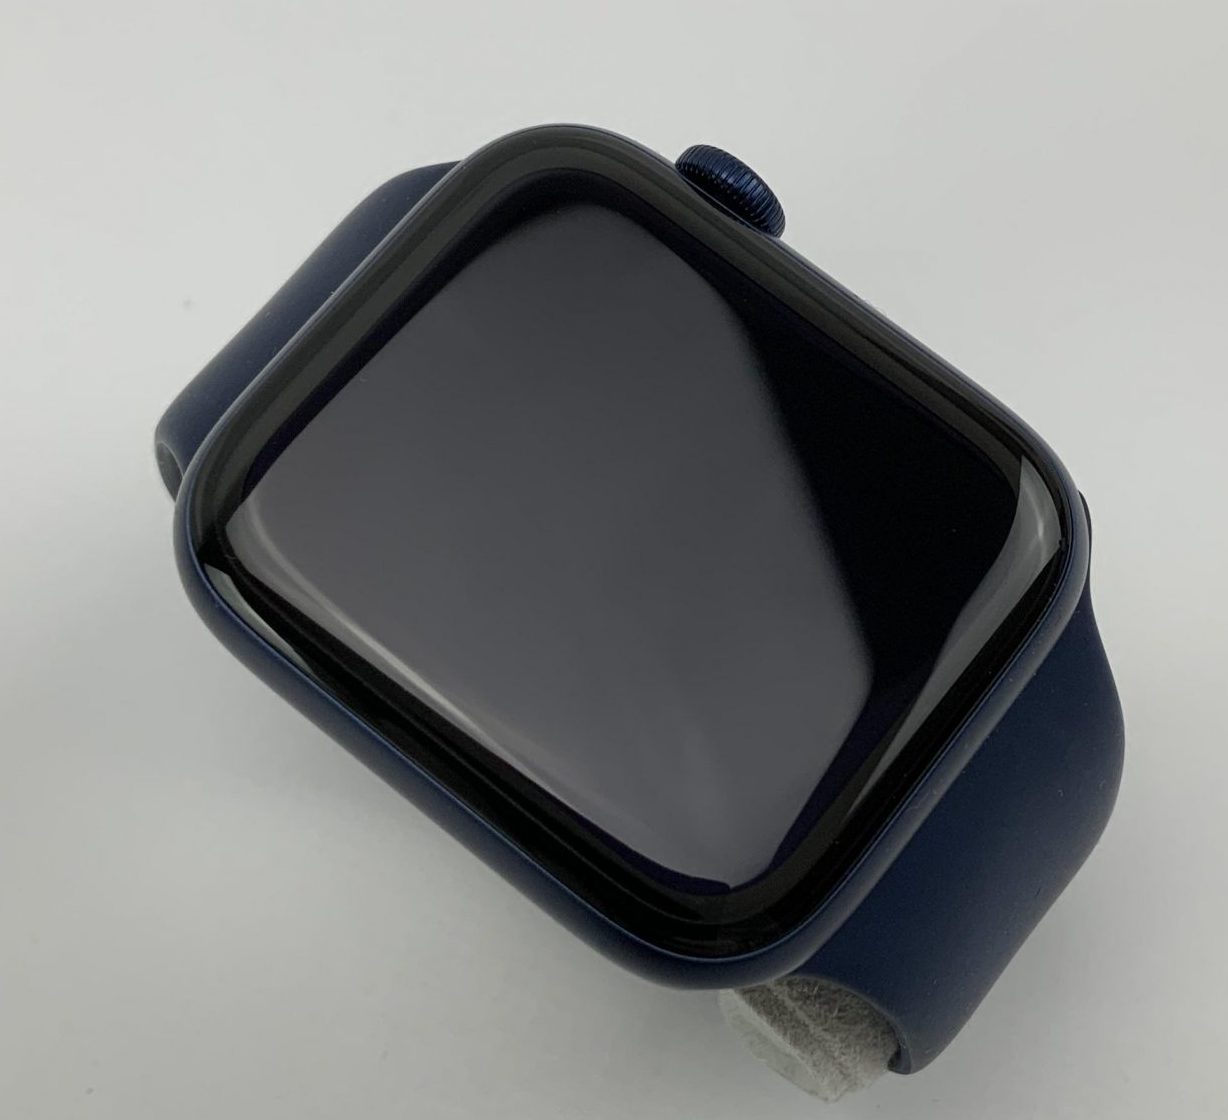 Watch Series 6 Aluminum Cellular (44mm), Blue, image 1